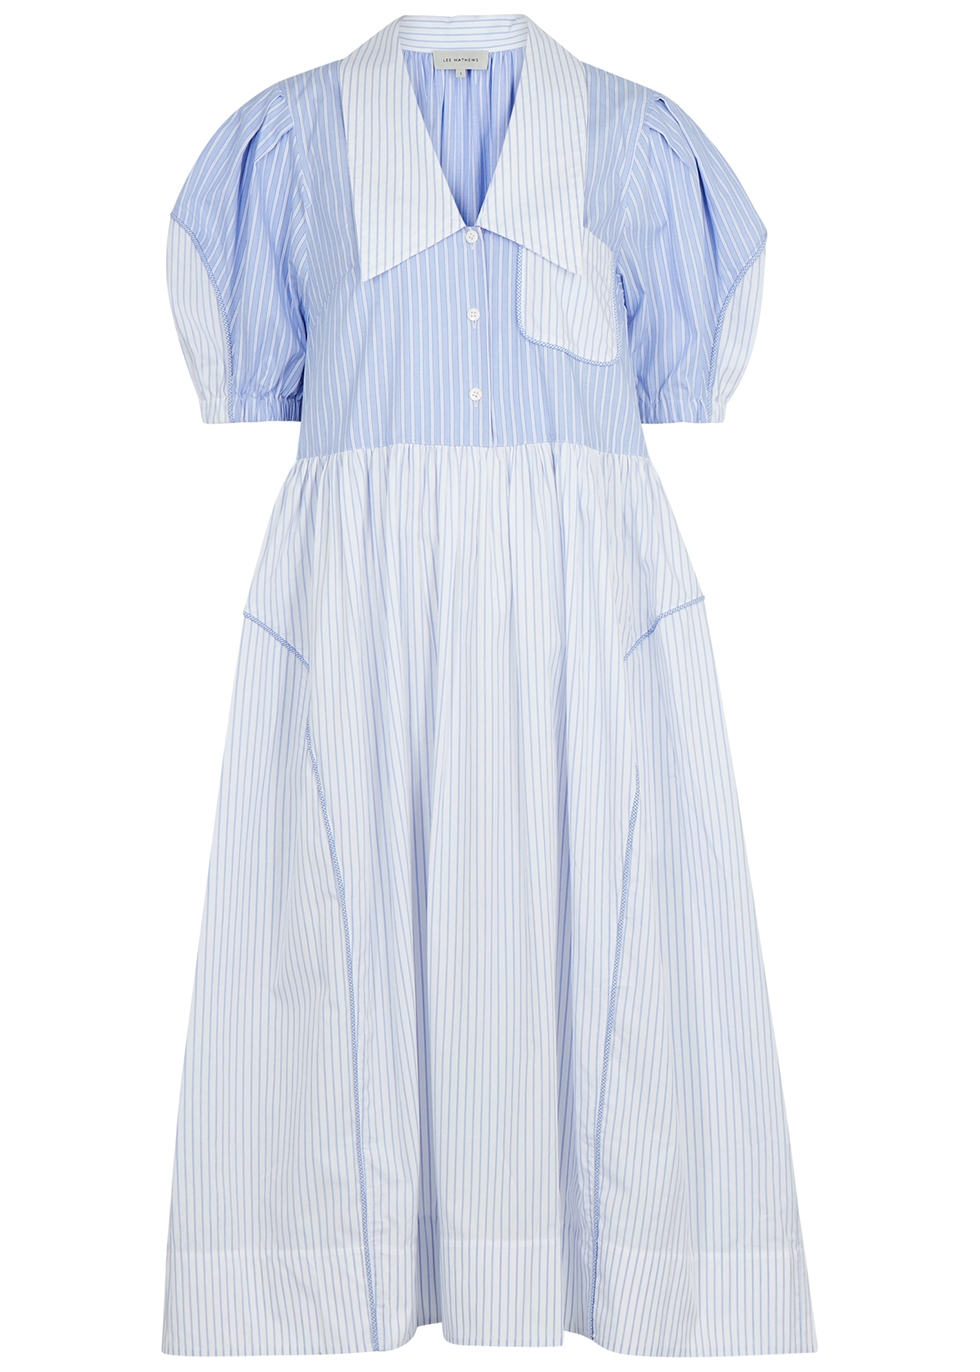 Lee Mathews Diana striped cotton shirt dress - Harvey Nichols